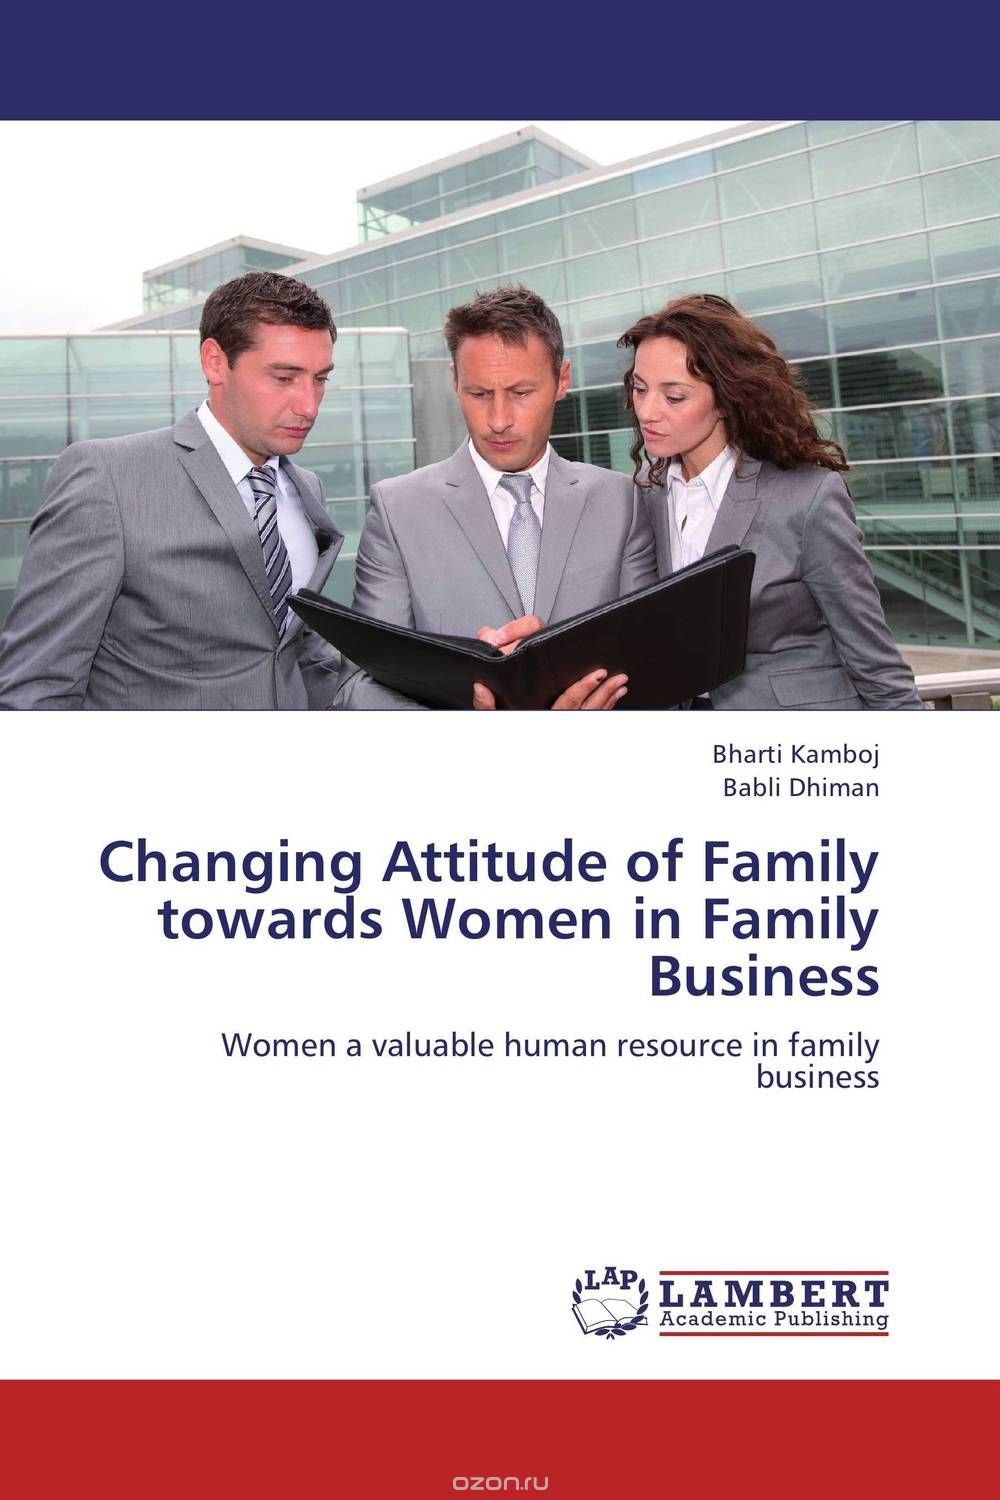 Скачать книгу "Changing Attitude of Family towards Women in Family Business"